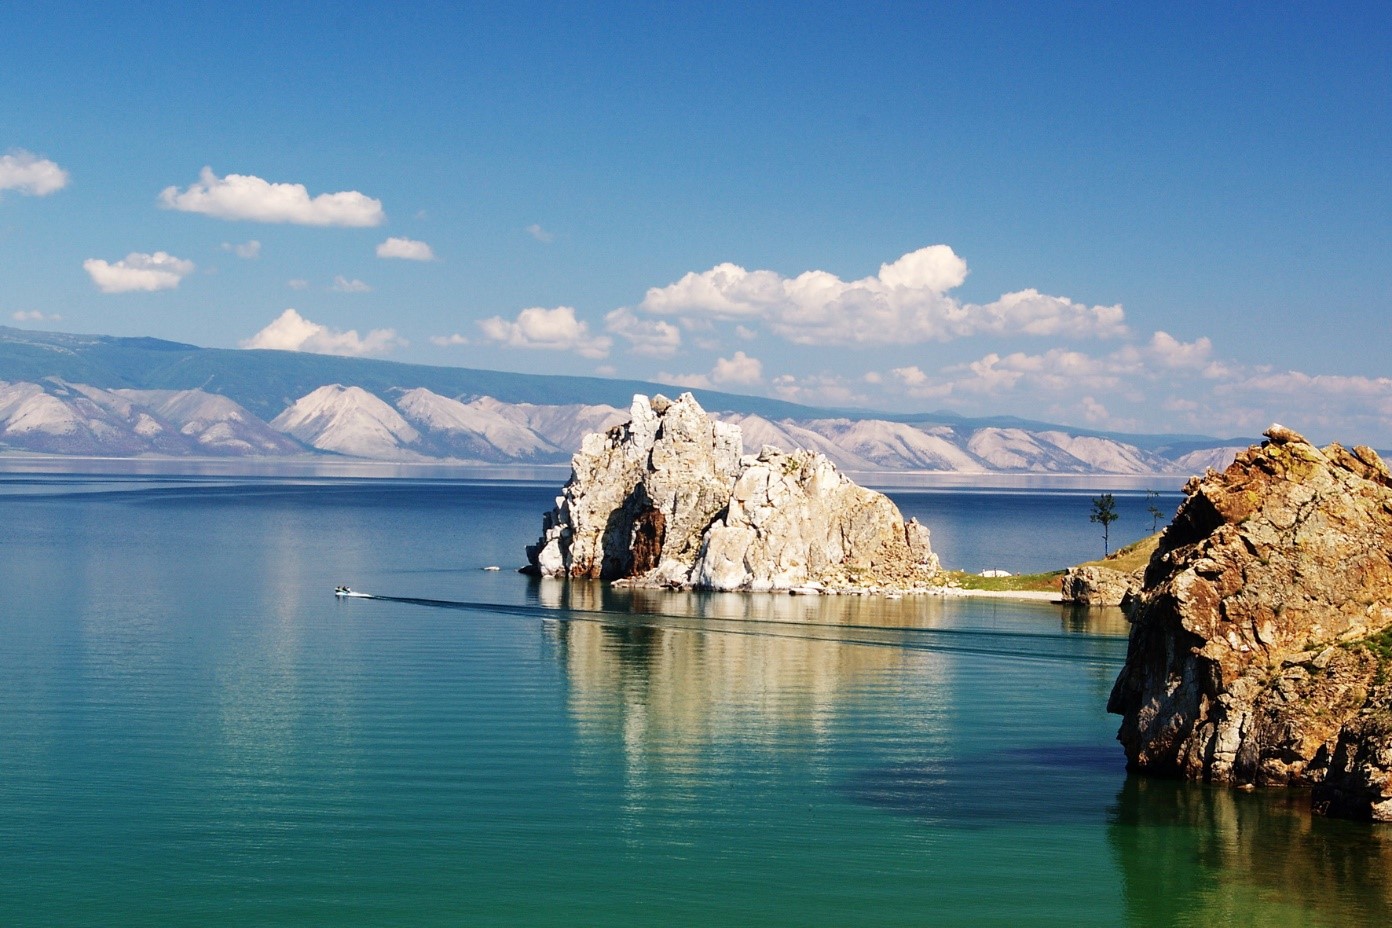 Baikal lake / Озеро Байкал